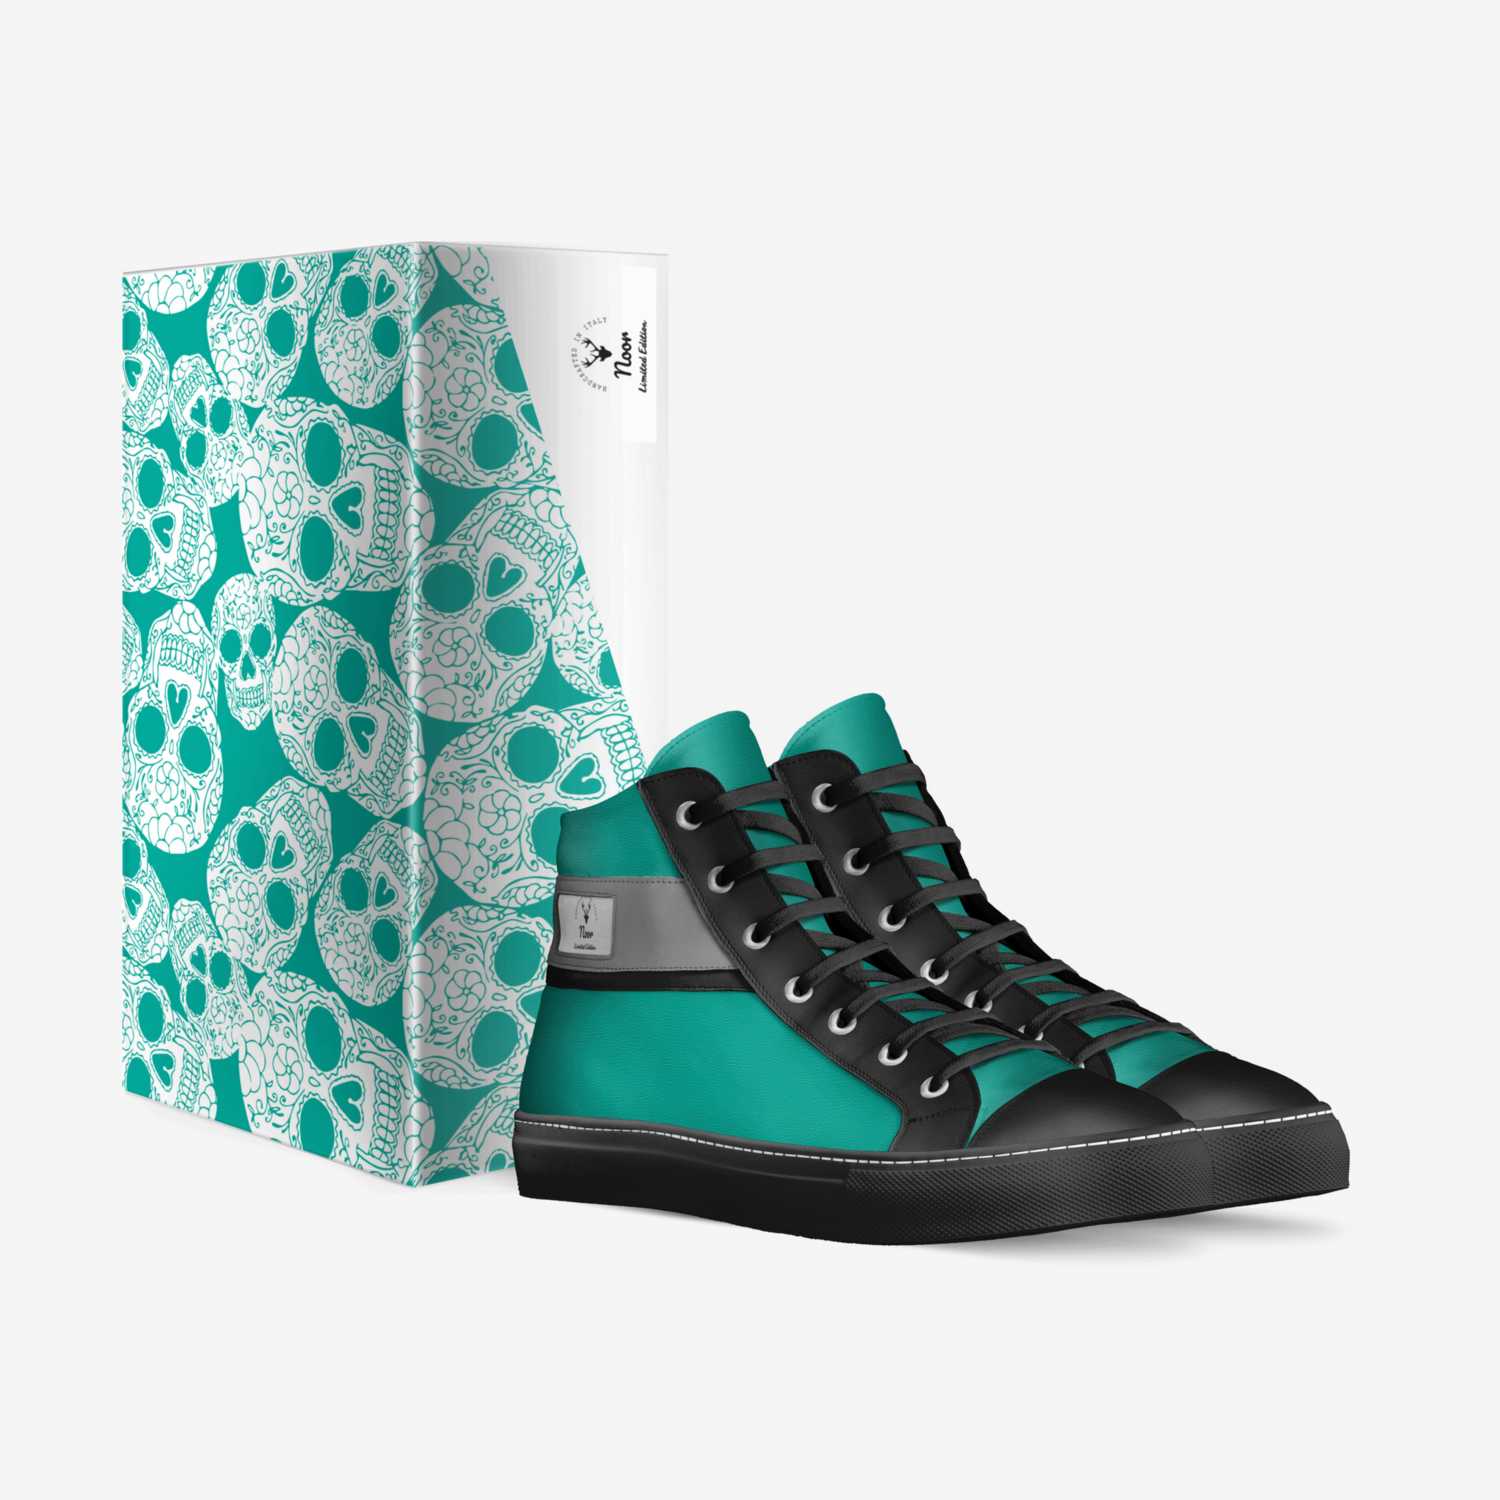 Noor custom made in Italy shoes by Alishba Noor Ahmad | Box view